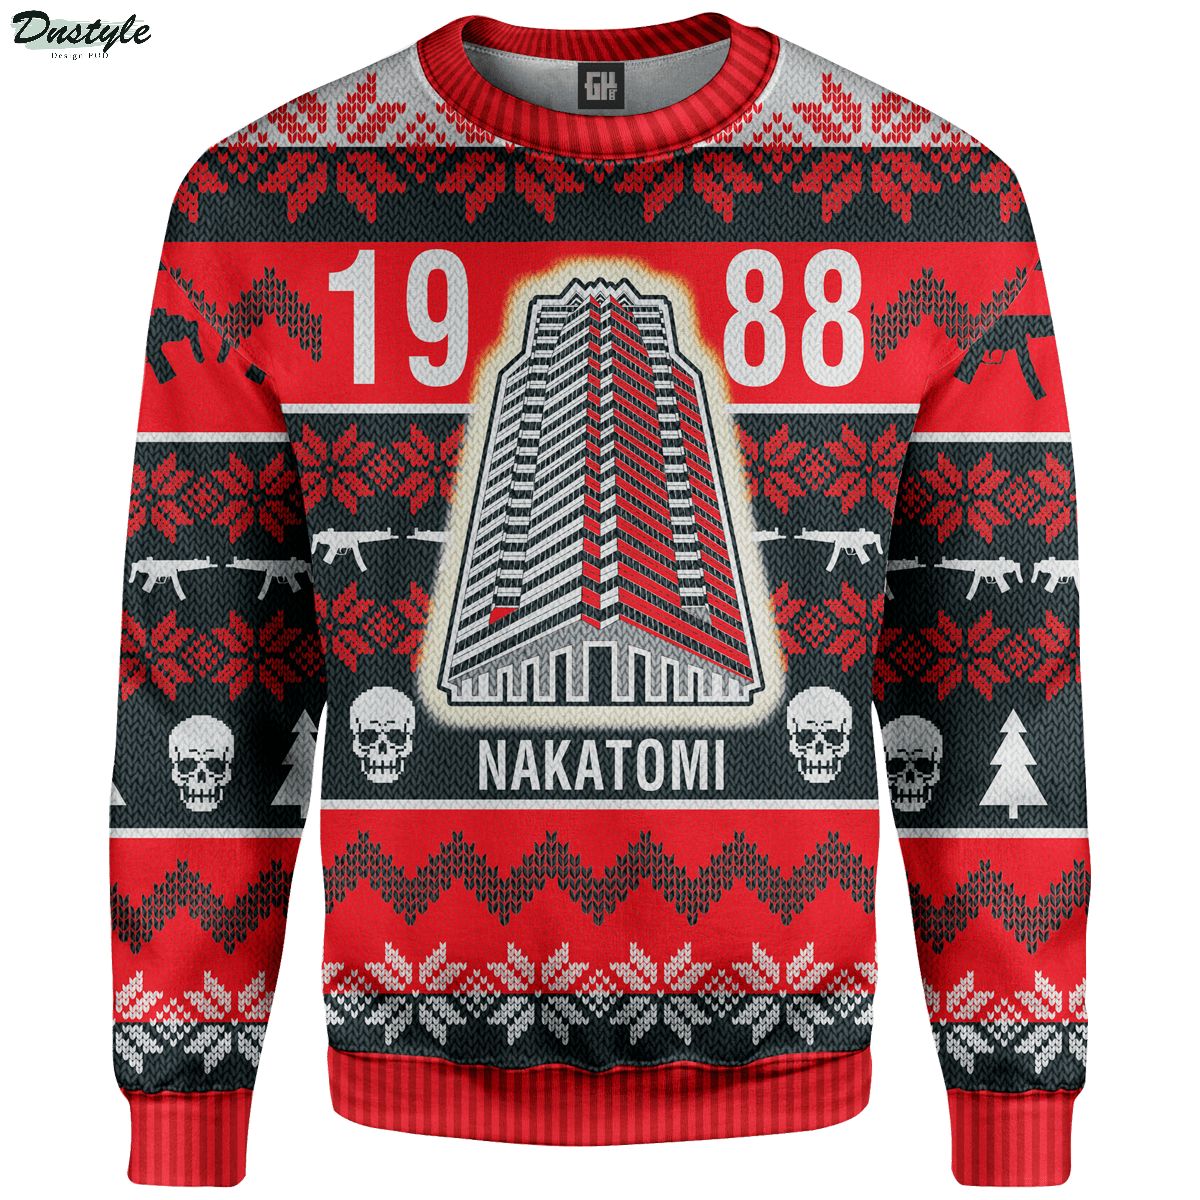 Nakatomi 1988 ugly christmas sweater